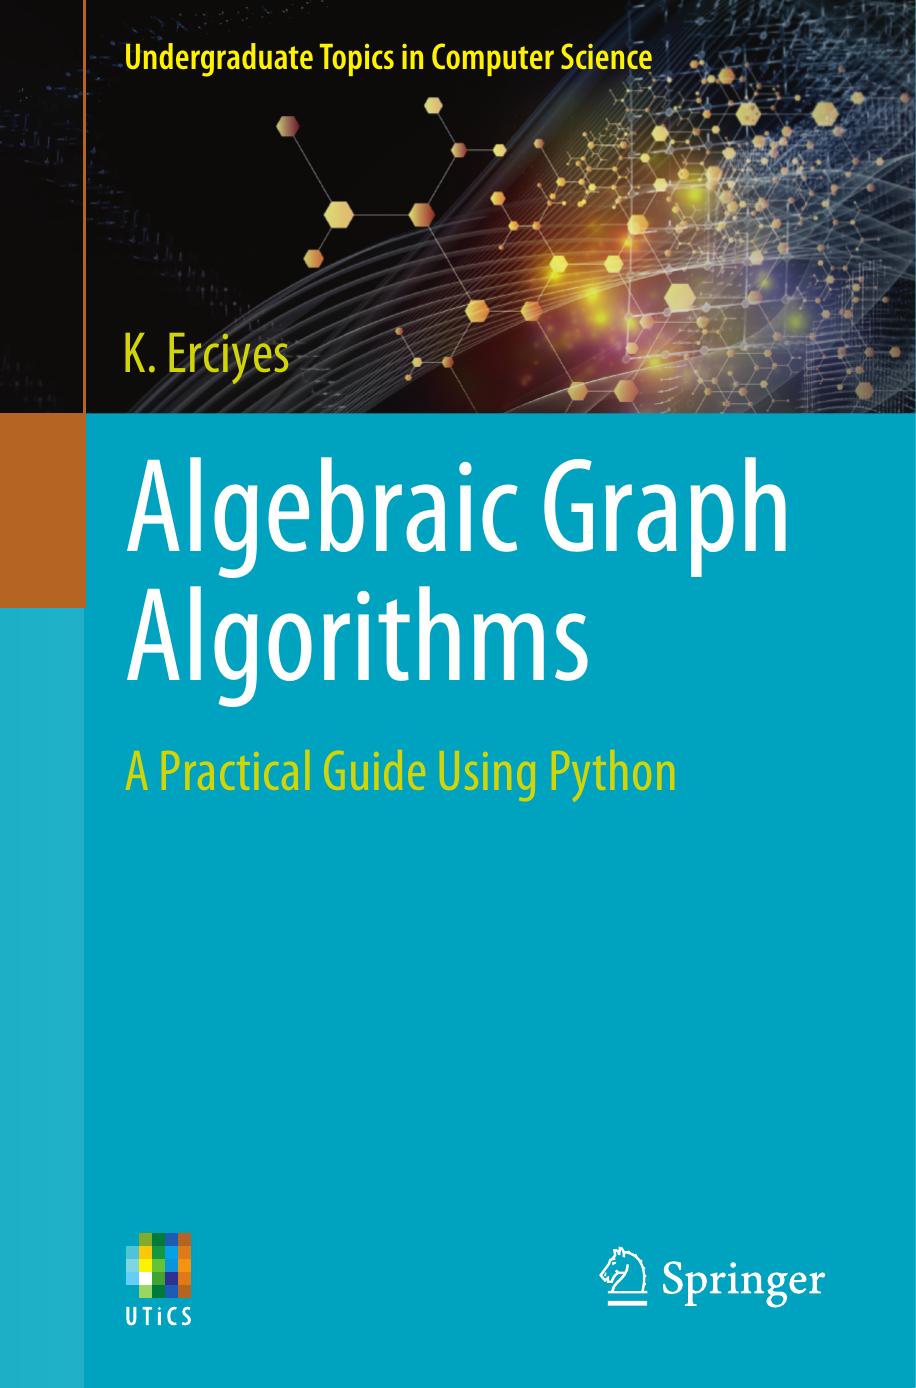 Algebraic Graph Algorithms: A Practical Guide Using Python